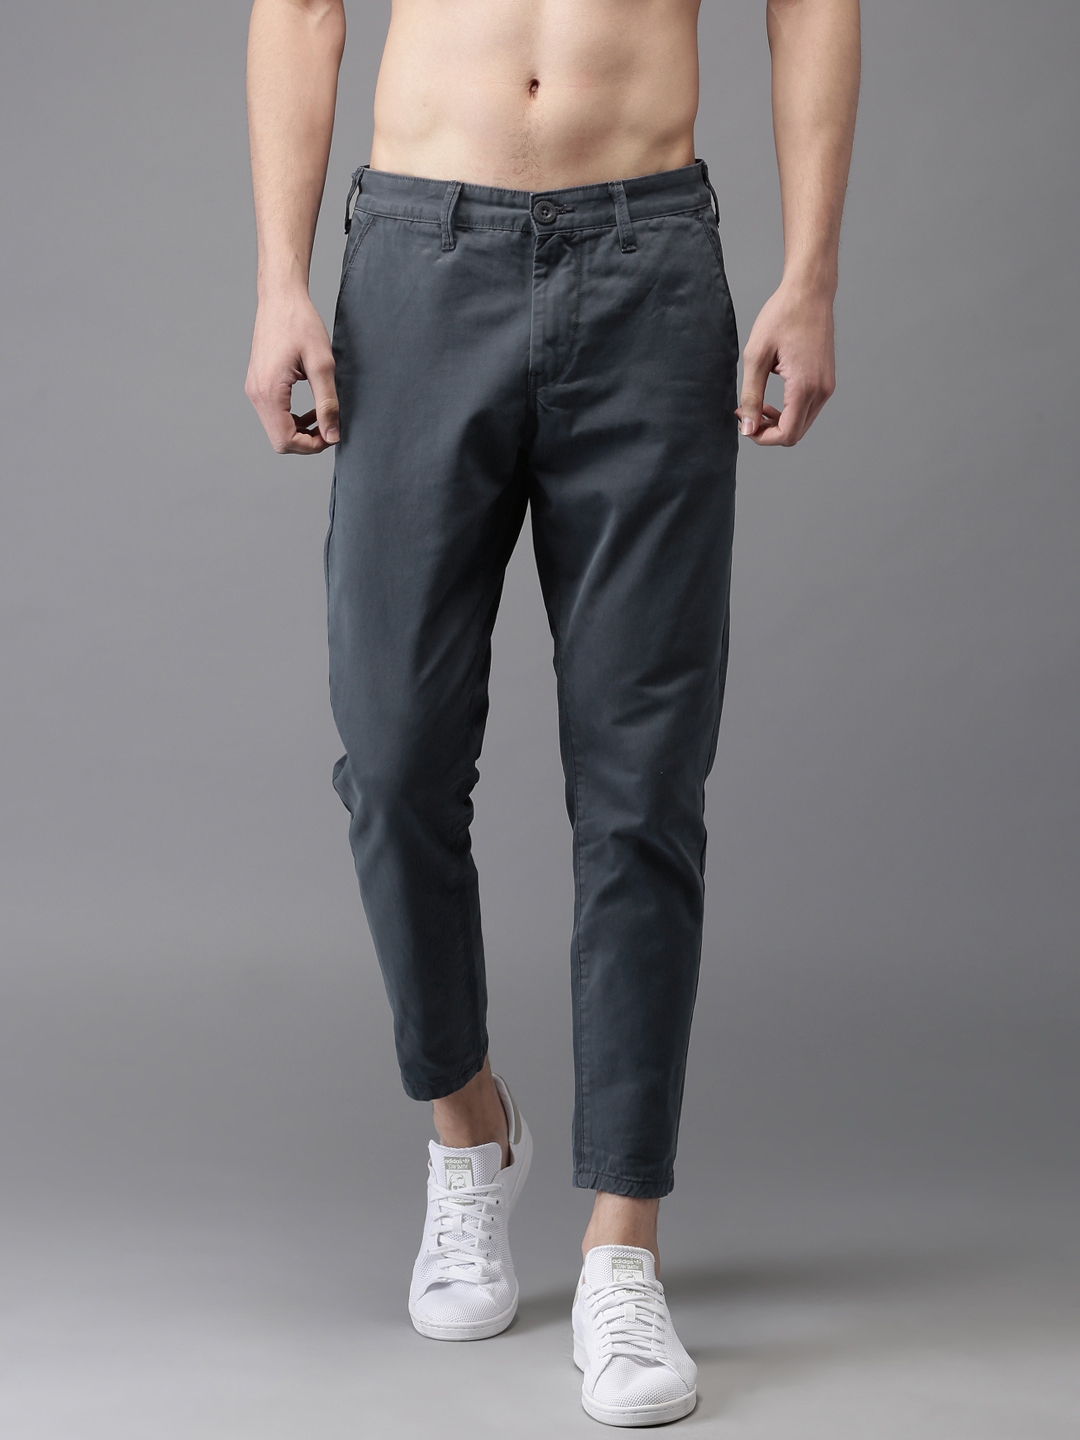 Buy Men Khaki Regular Fit Solid Casual Trousers Online  753086  Allen  Solly